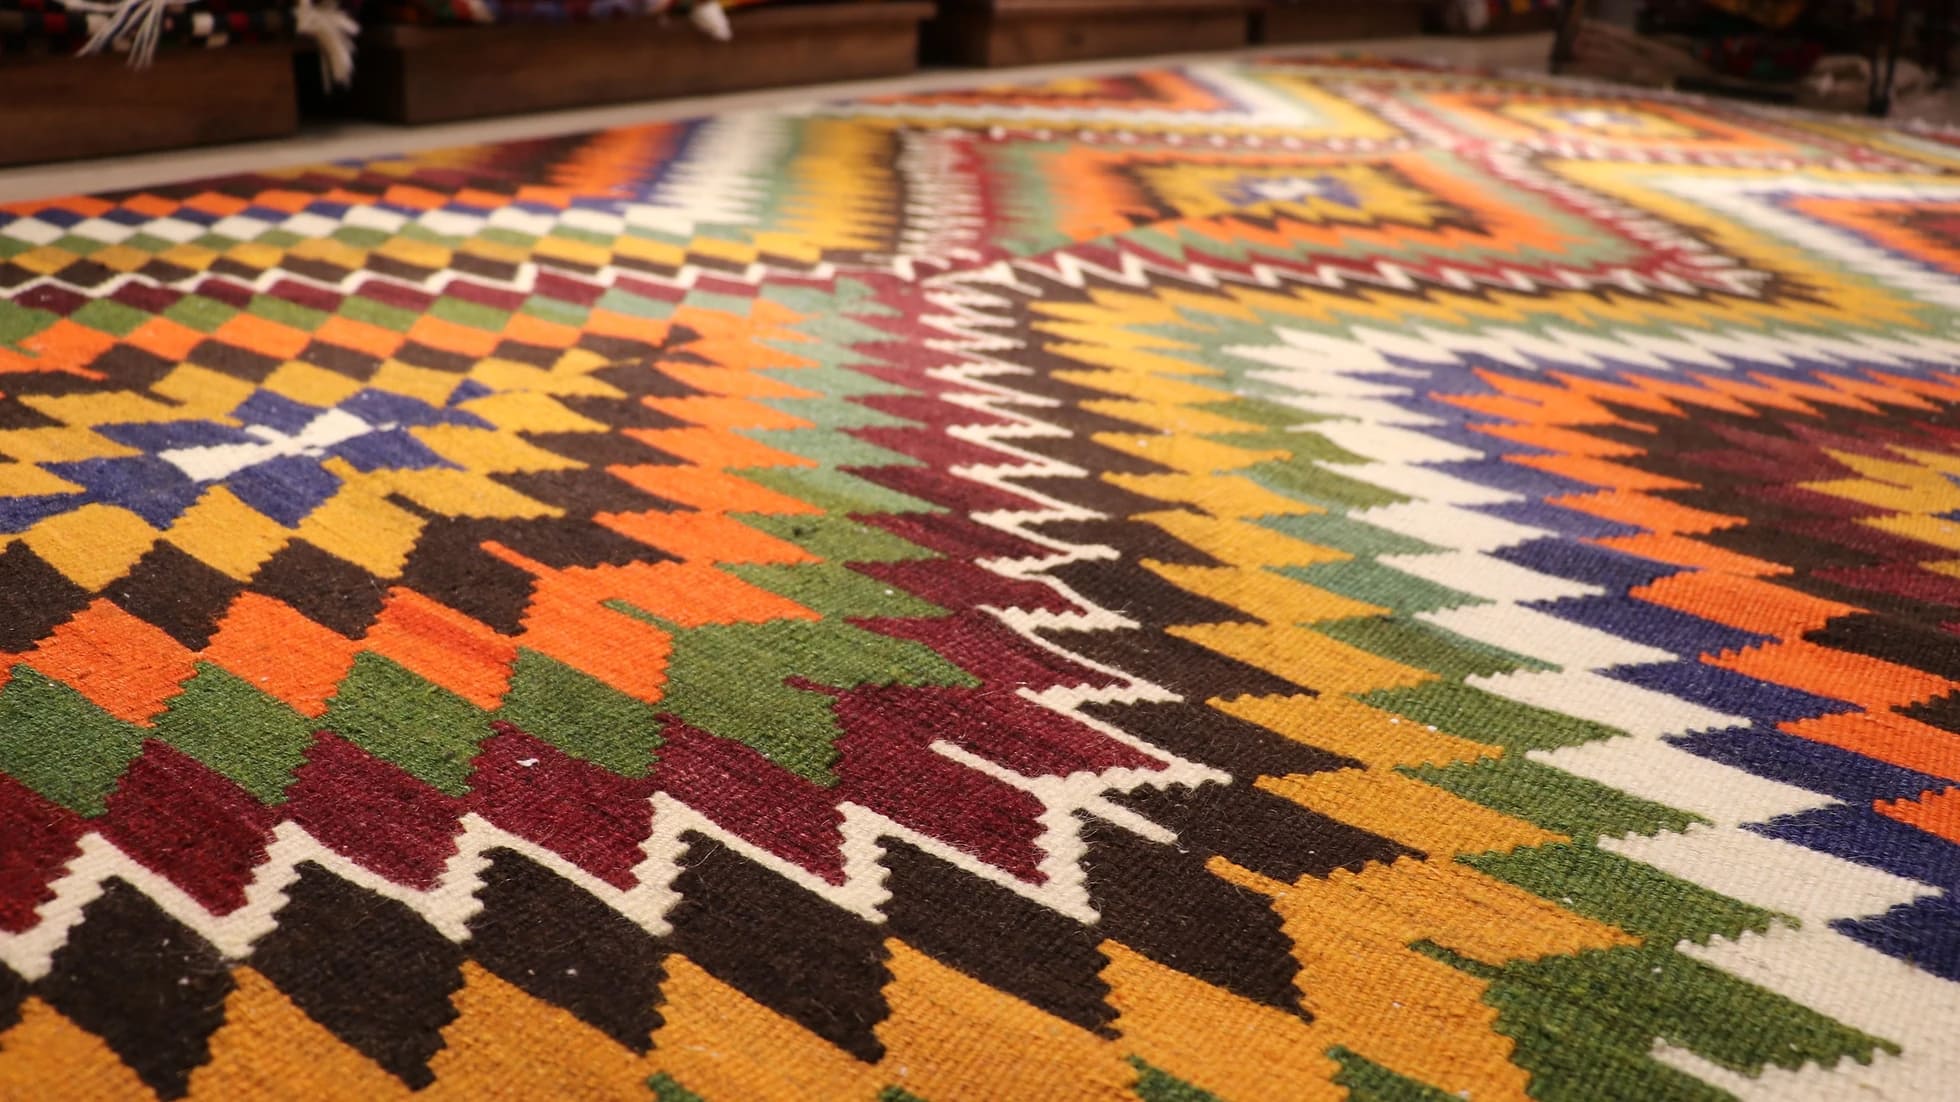 Diamond patterned turkish kilim rug in orange with tassels in detail